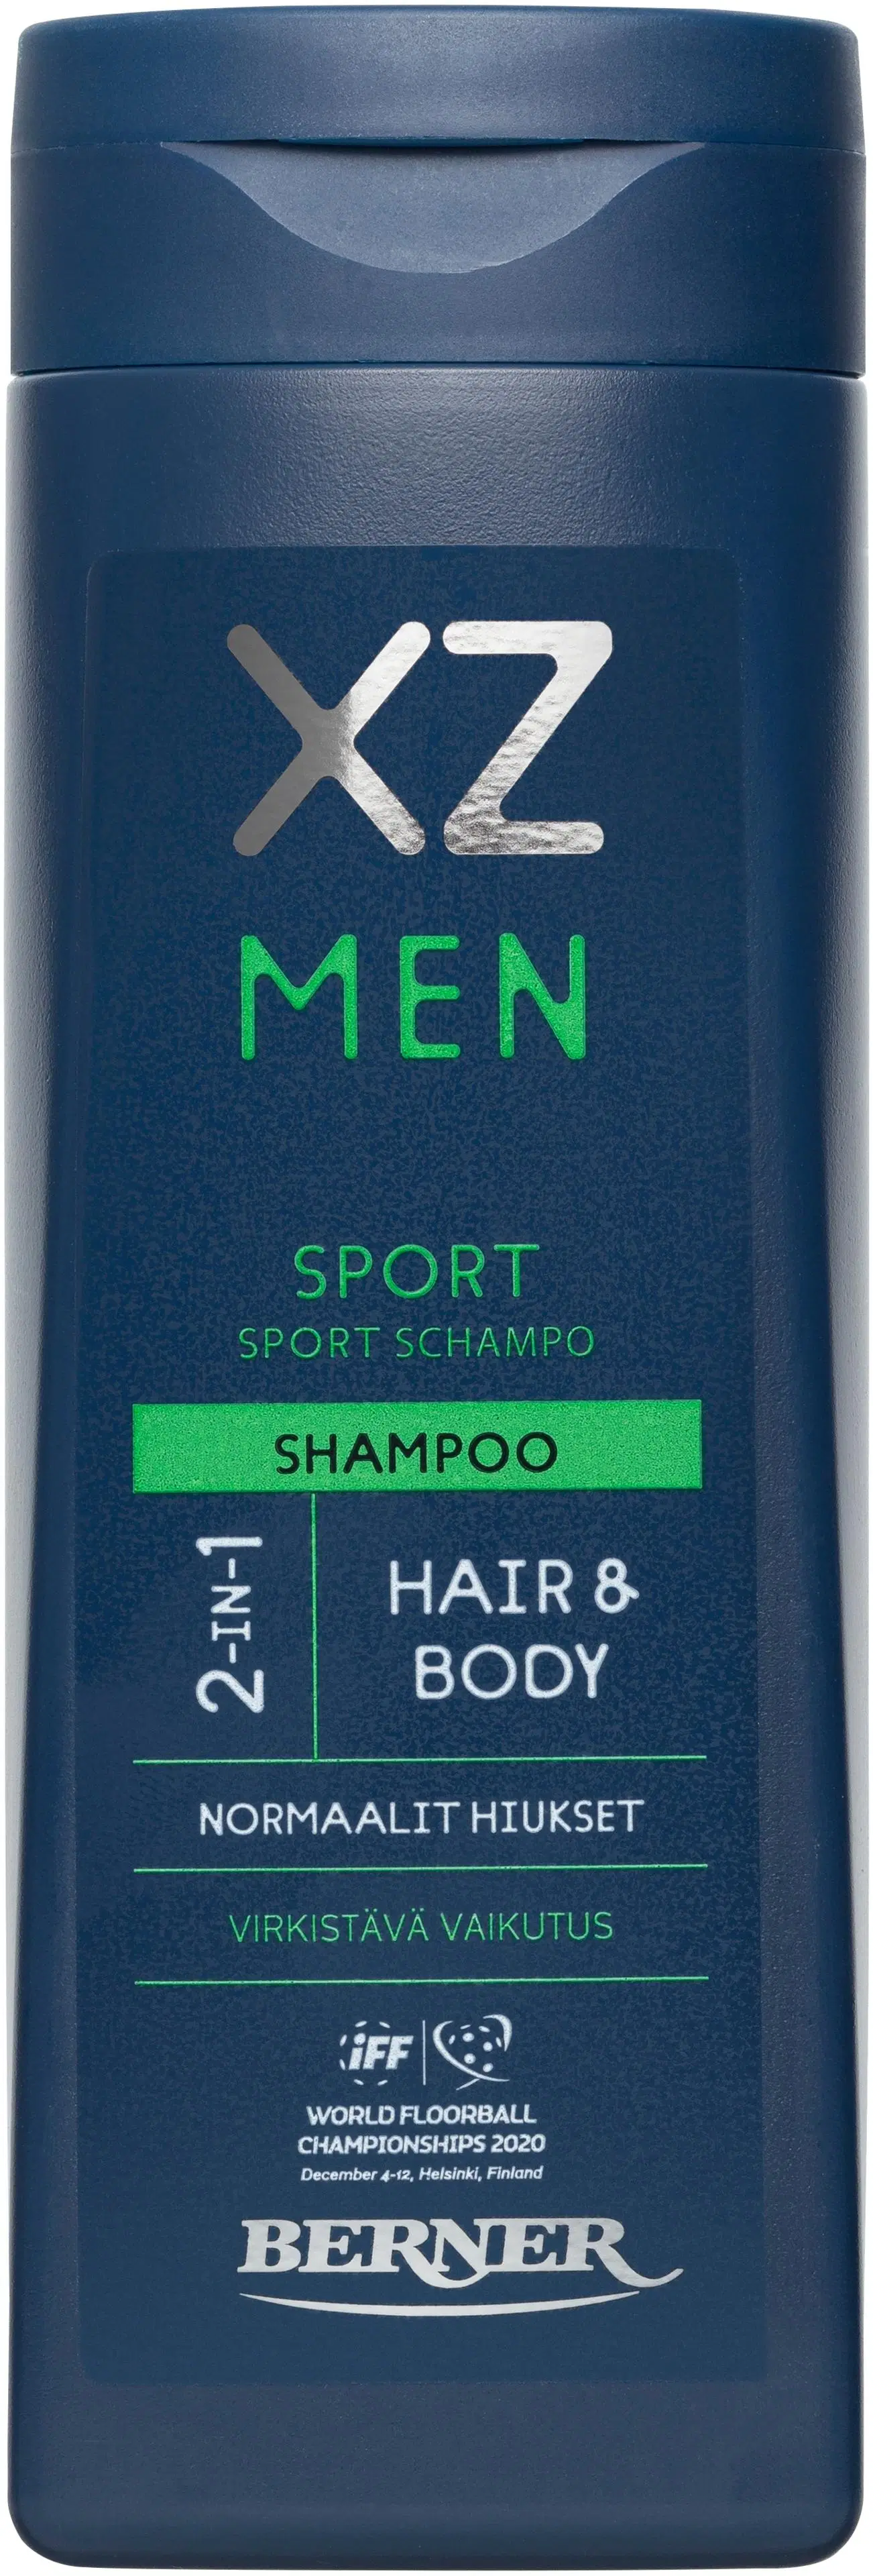 XZ 250ml Men 2-in-1 sport shampoo